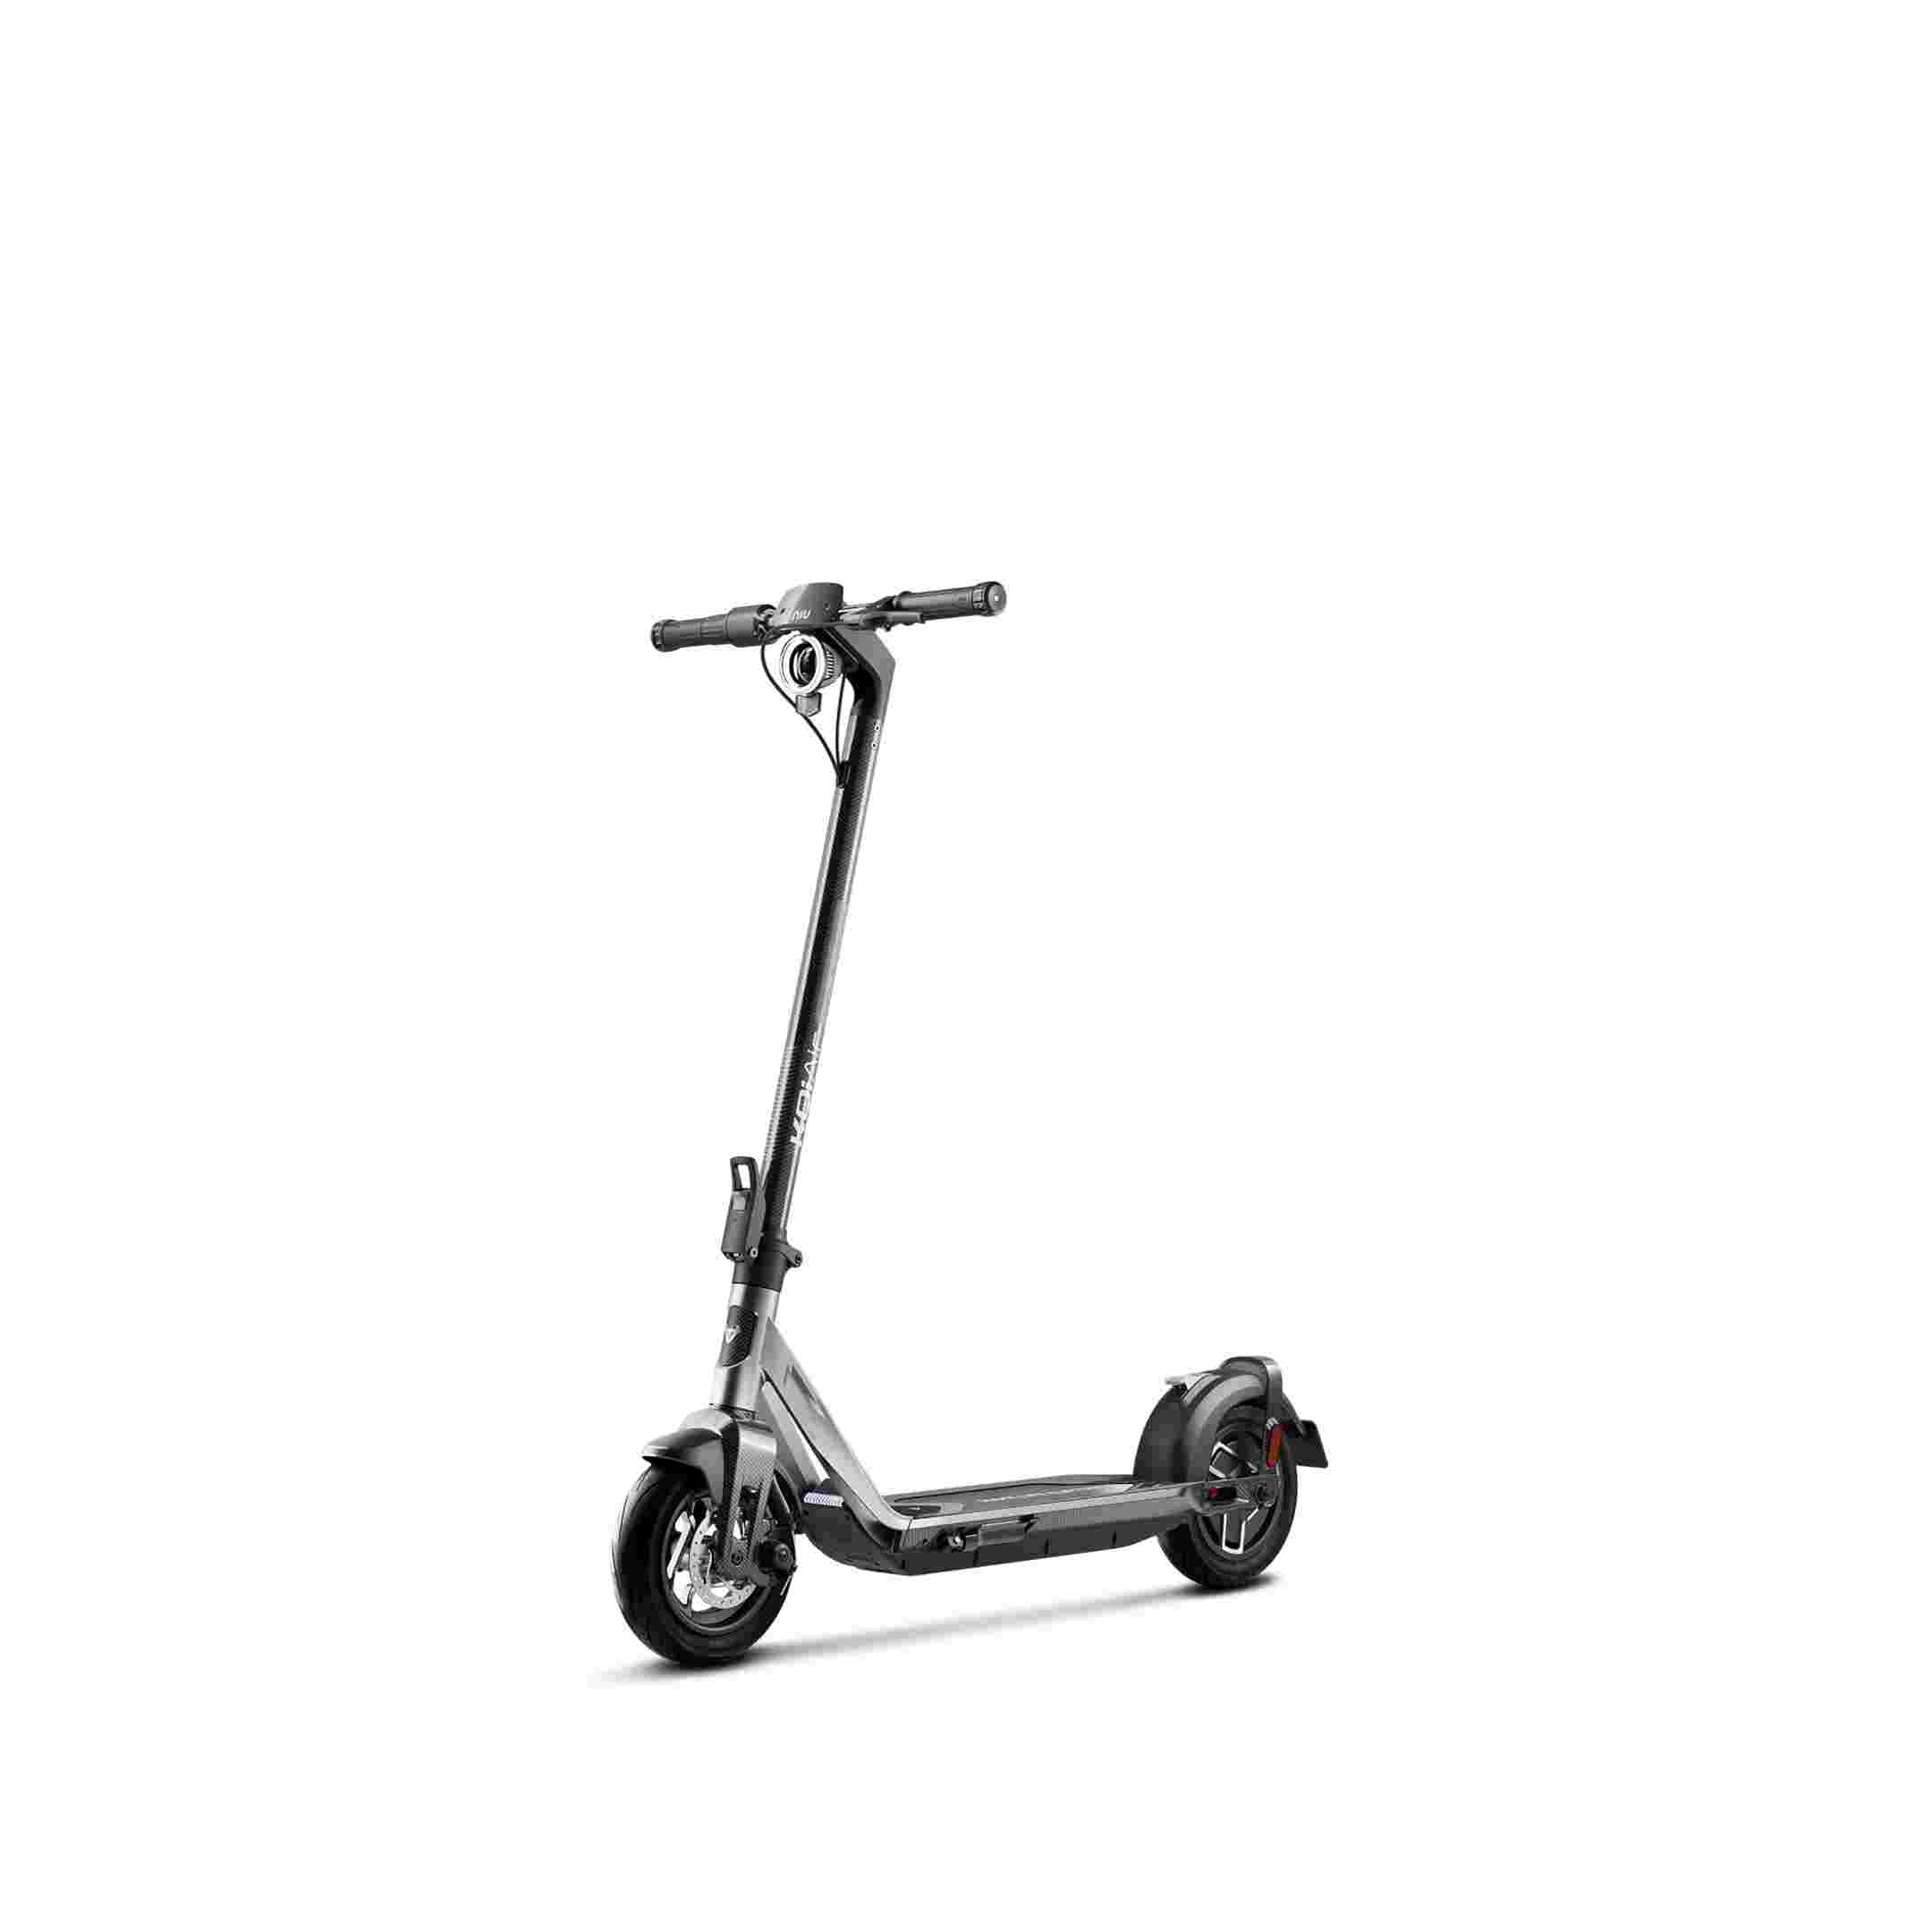 NIU KQi AIR: Long-range lightweight electric scooter